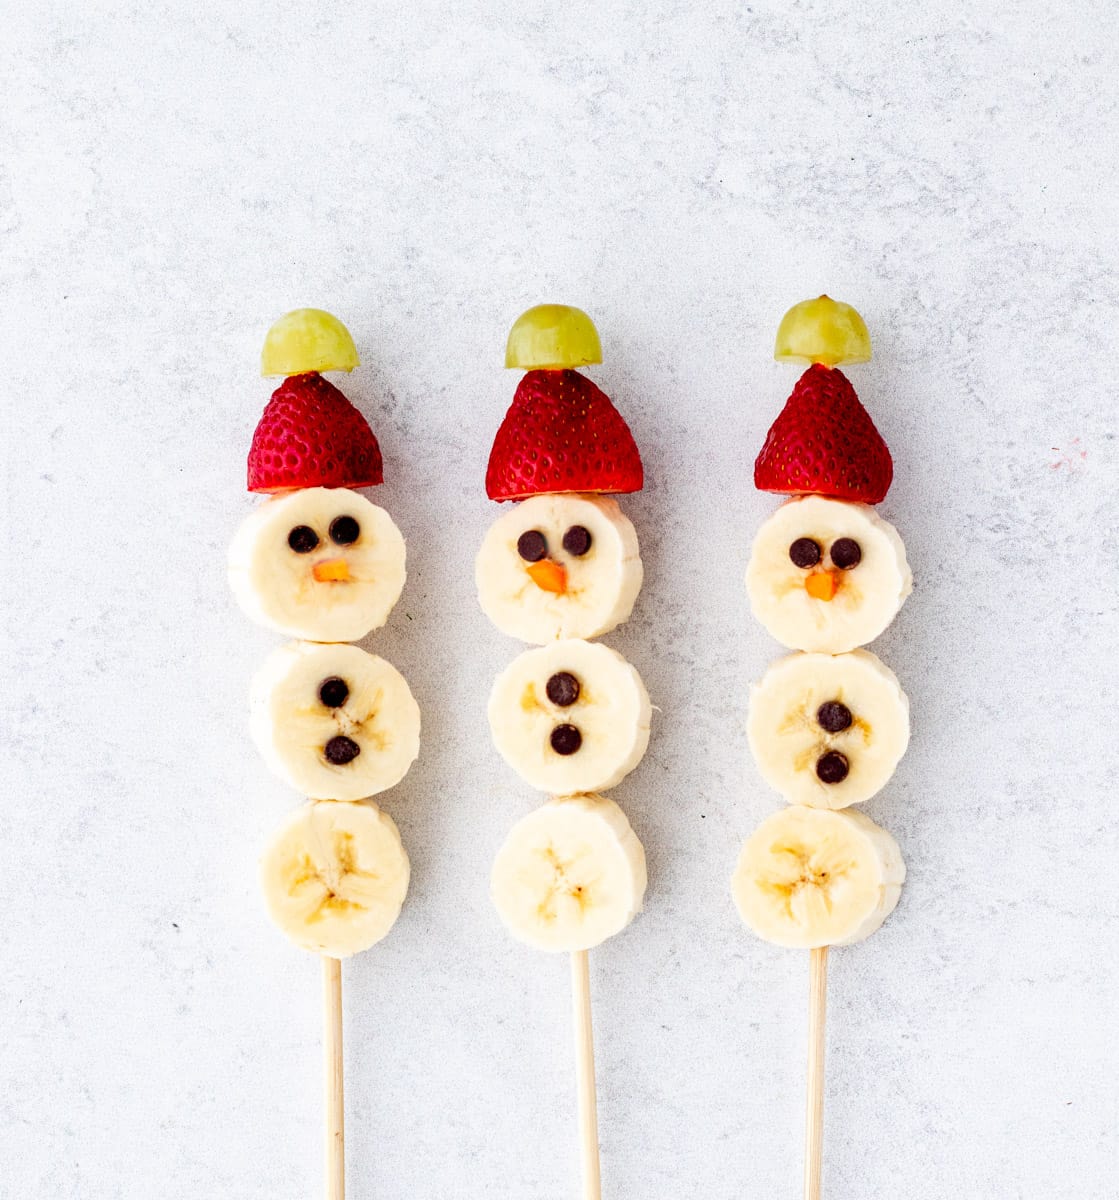 Banana slices, strawberries, grapes and mini dark chocolate chips on skewers to make banana snowmen.